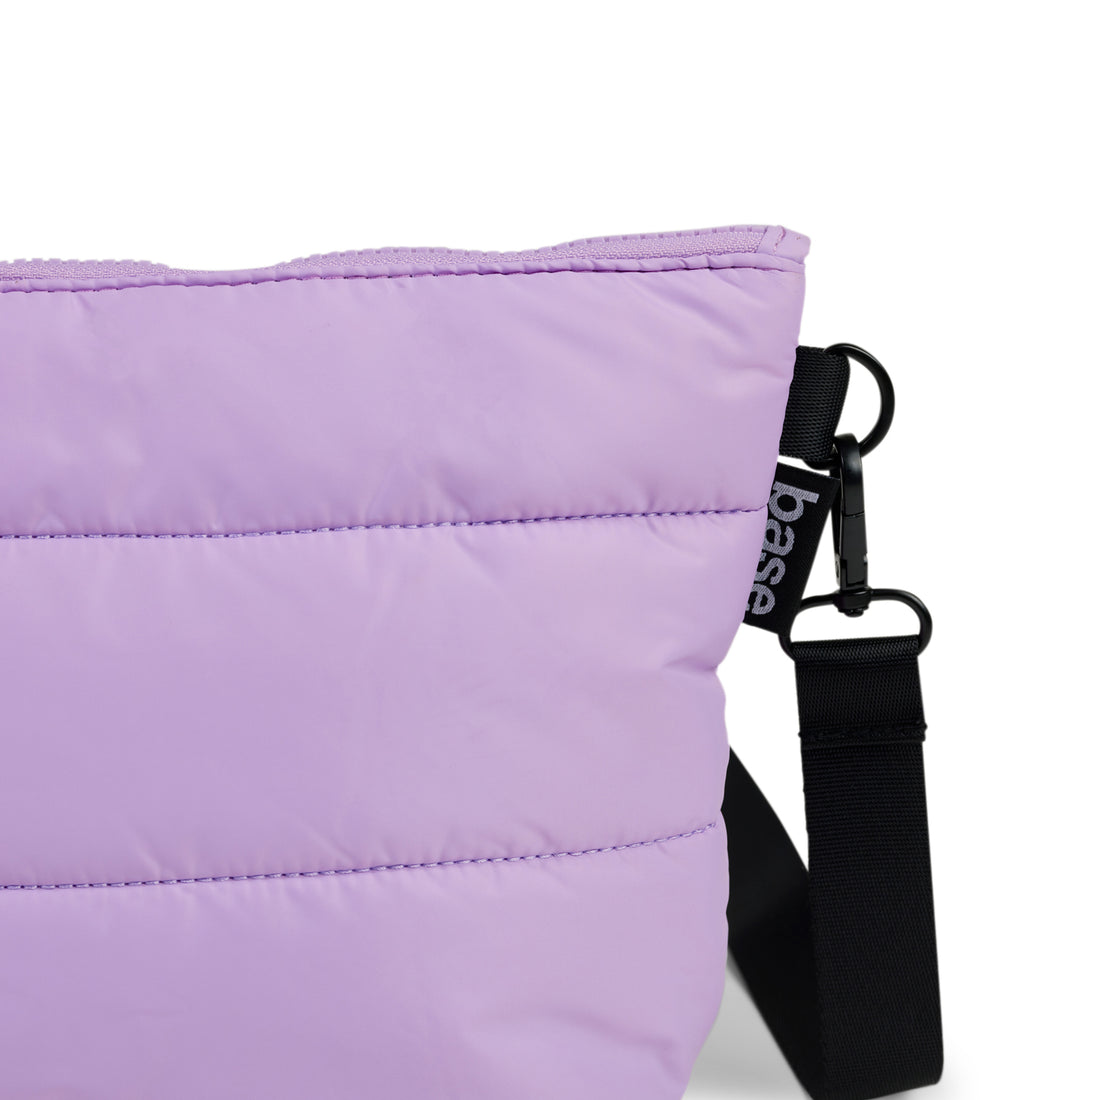 Similar Products To #BRAXLEY Stash Bag Lilac Purple OS